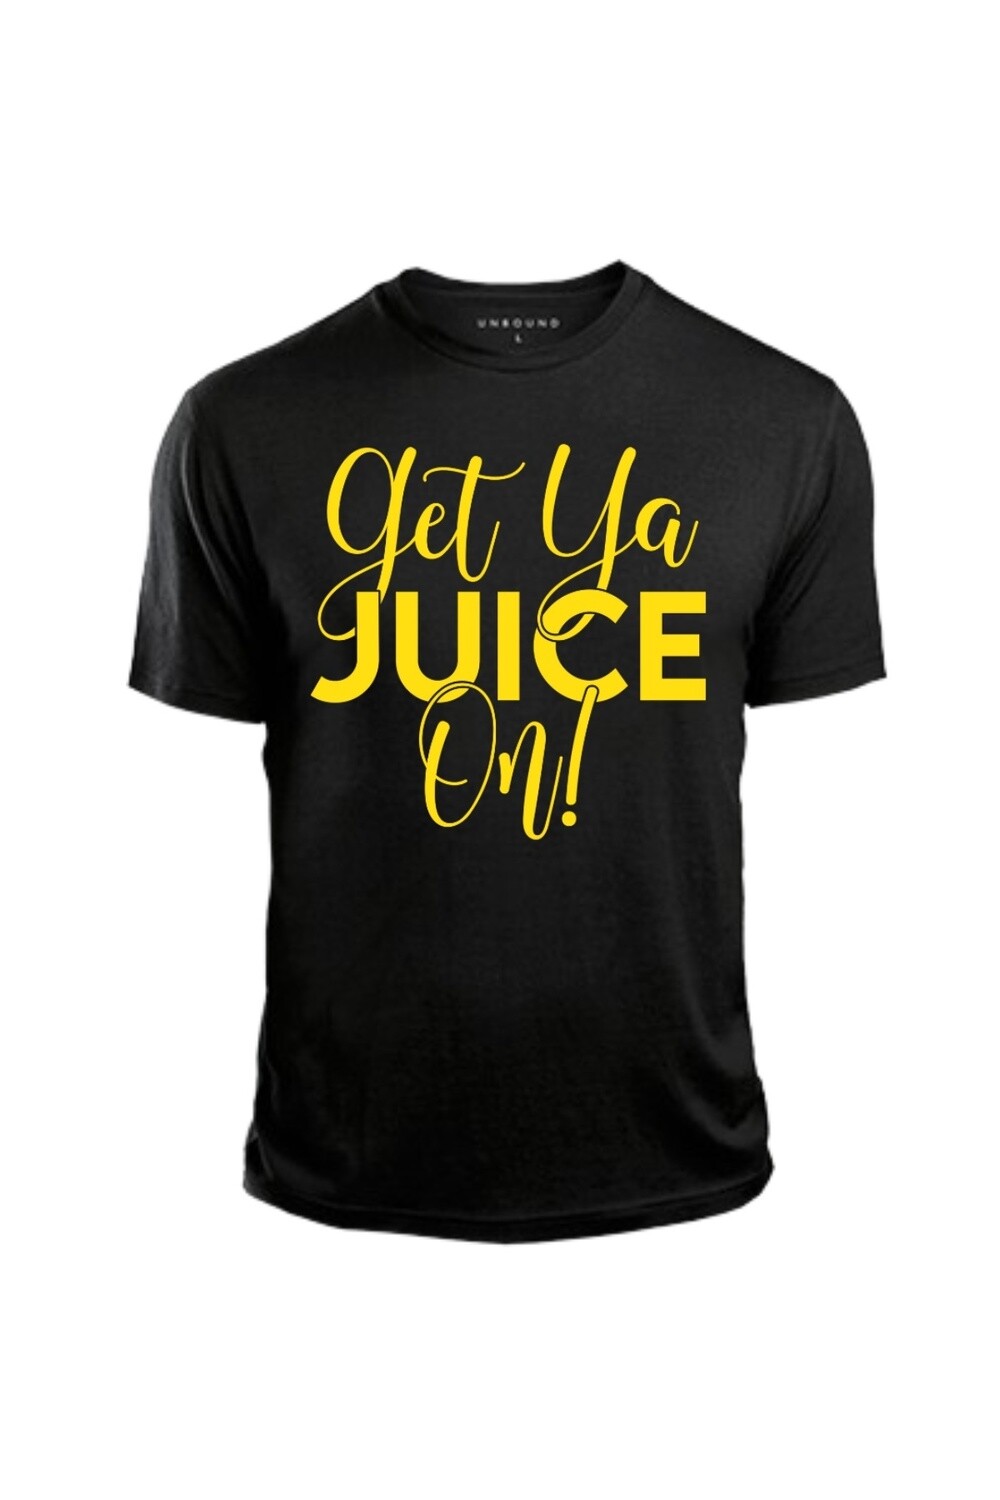 Get Ya Juice On Black T-shirt